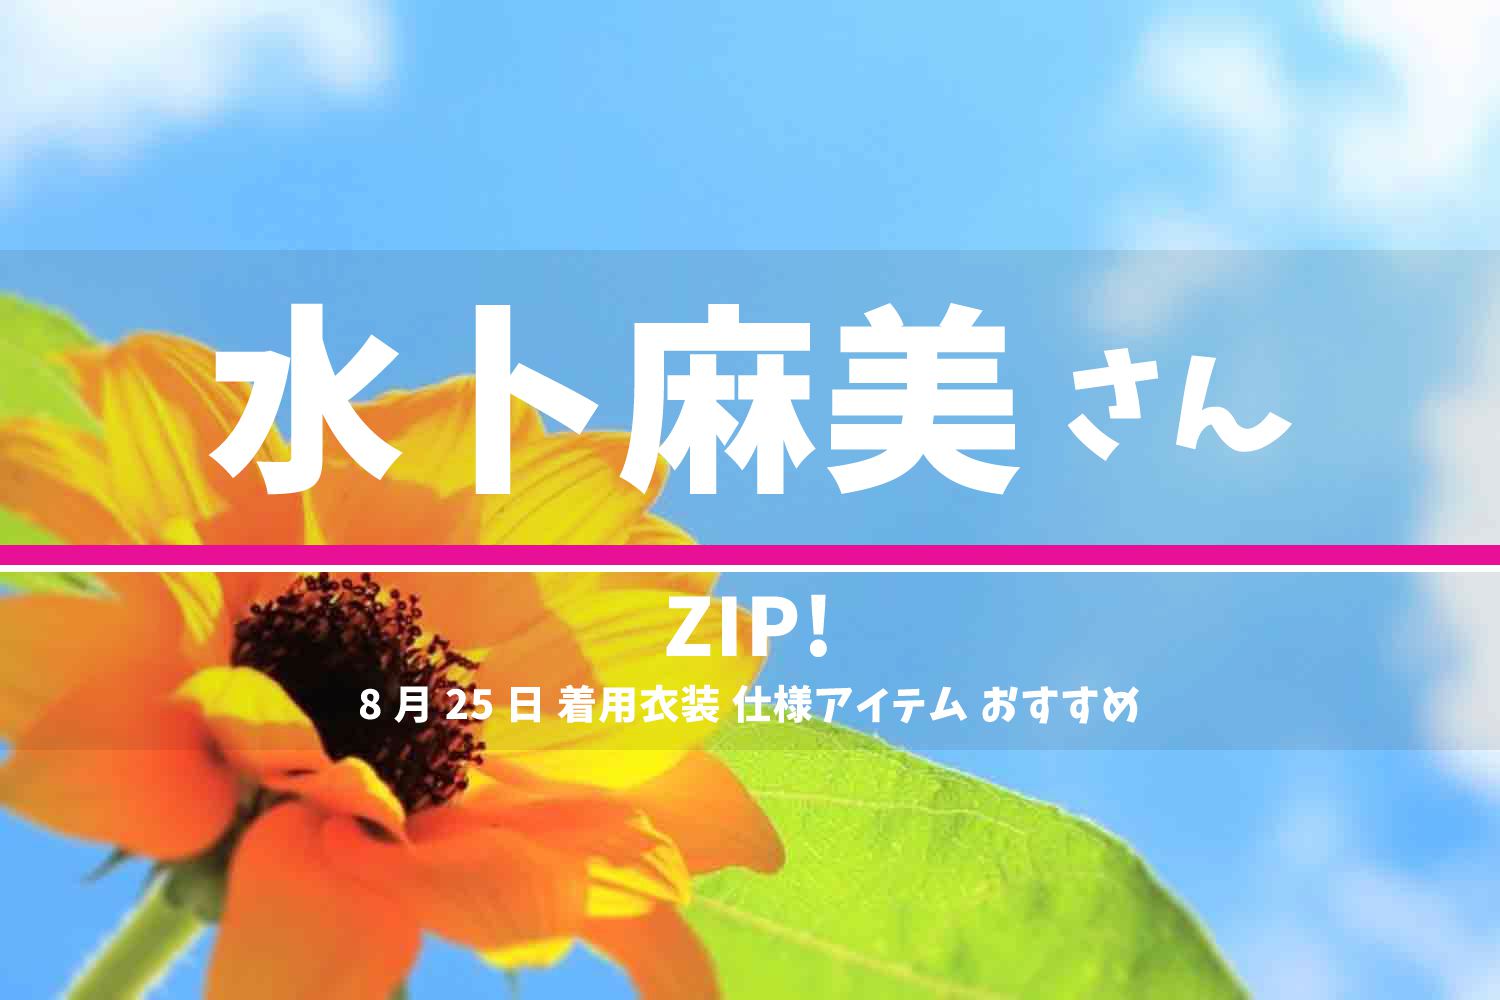 ZIP! 水卜麻美さん 番組 衣装 2022年8月25日放送